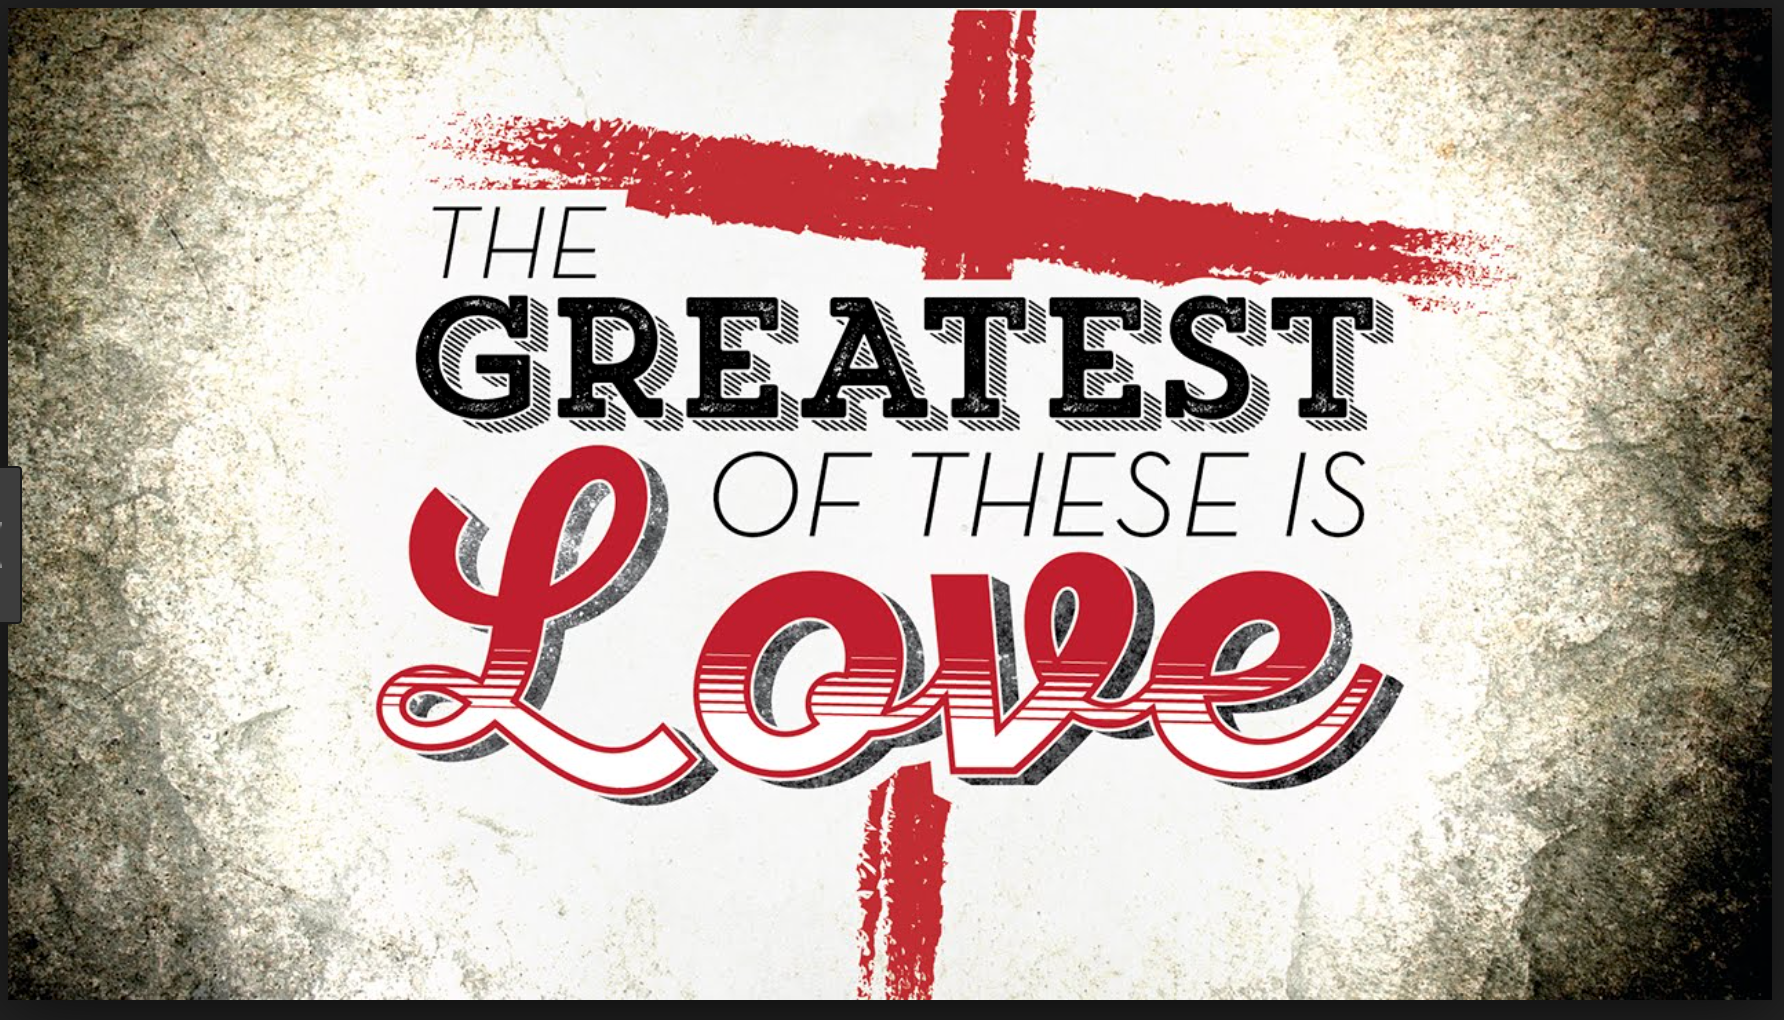 The Greatest of These is Love. by Ed Elliott | by Ed Elliott | Medium